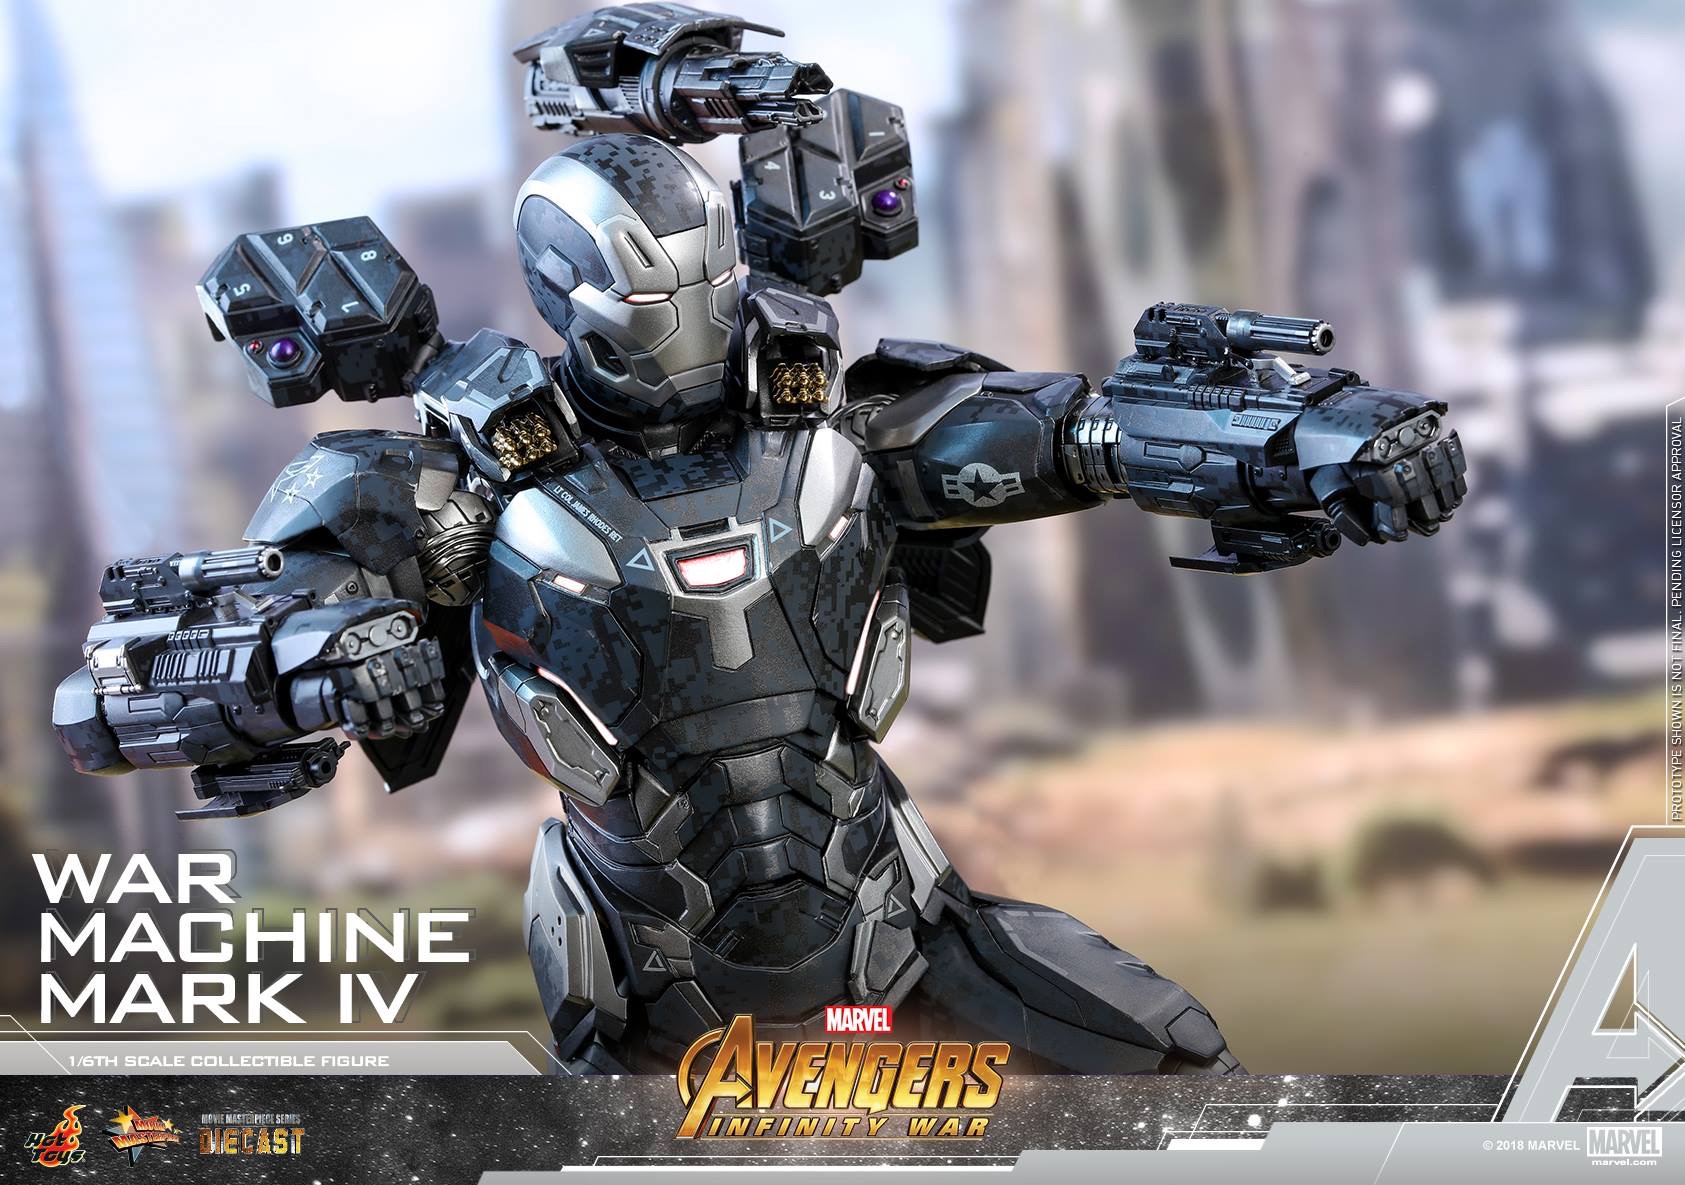 Avengers Infinity War War Machine Mark Iv Collectible